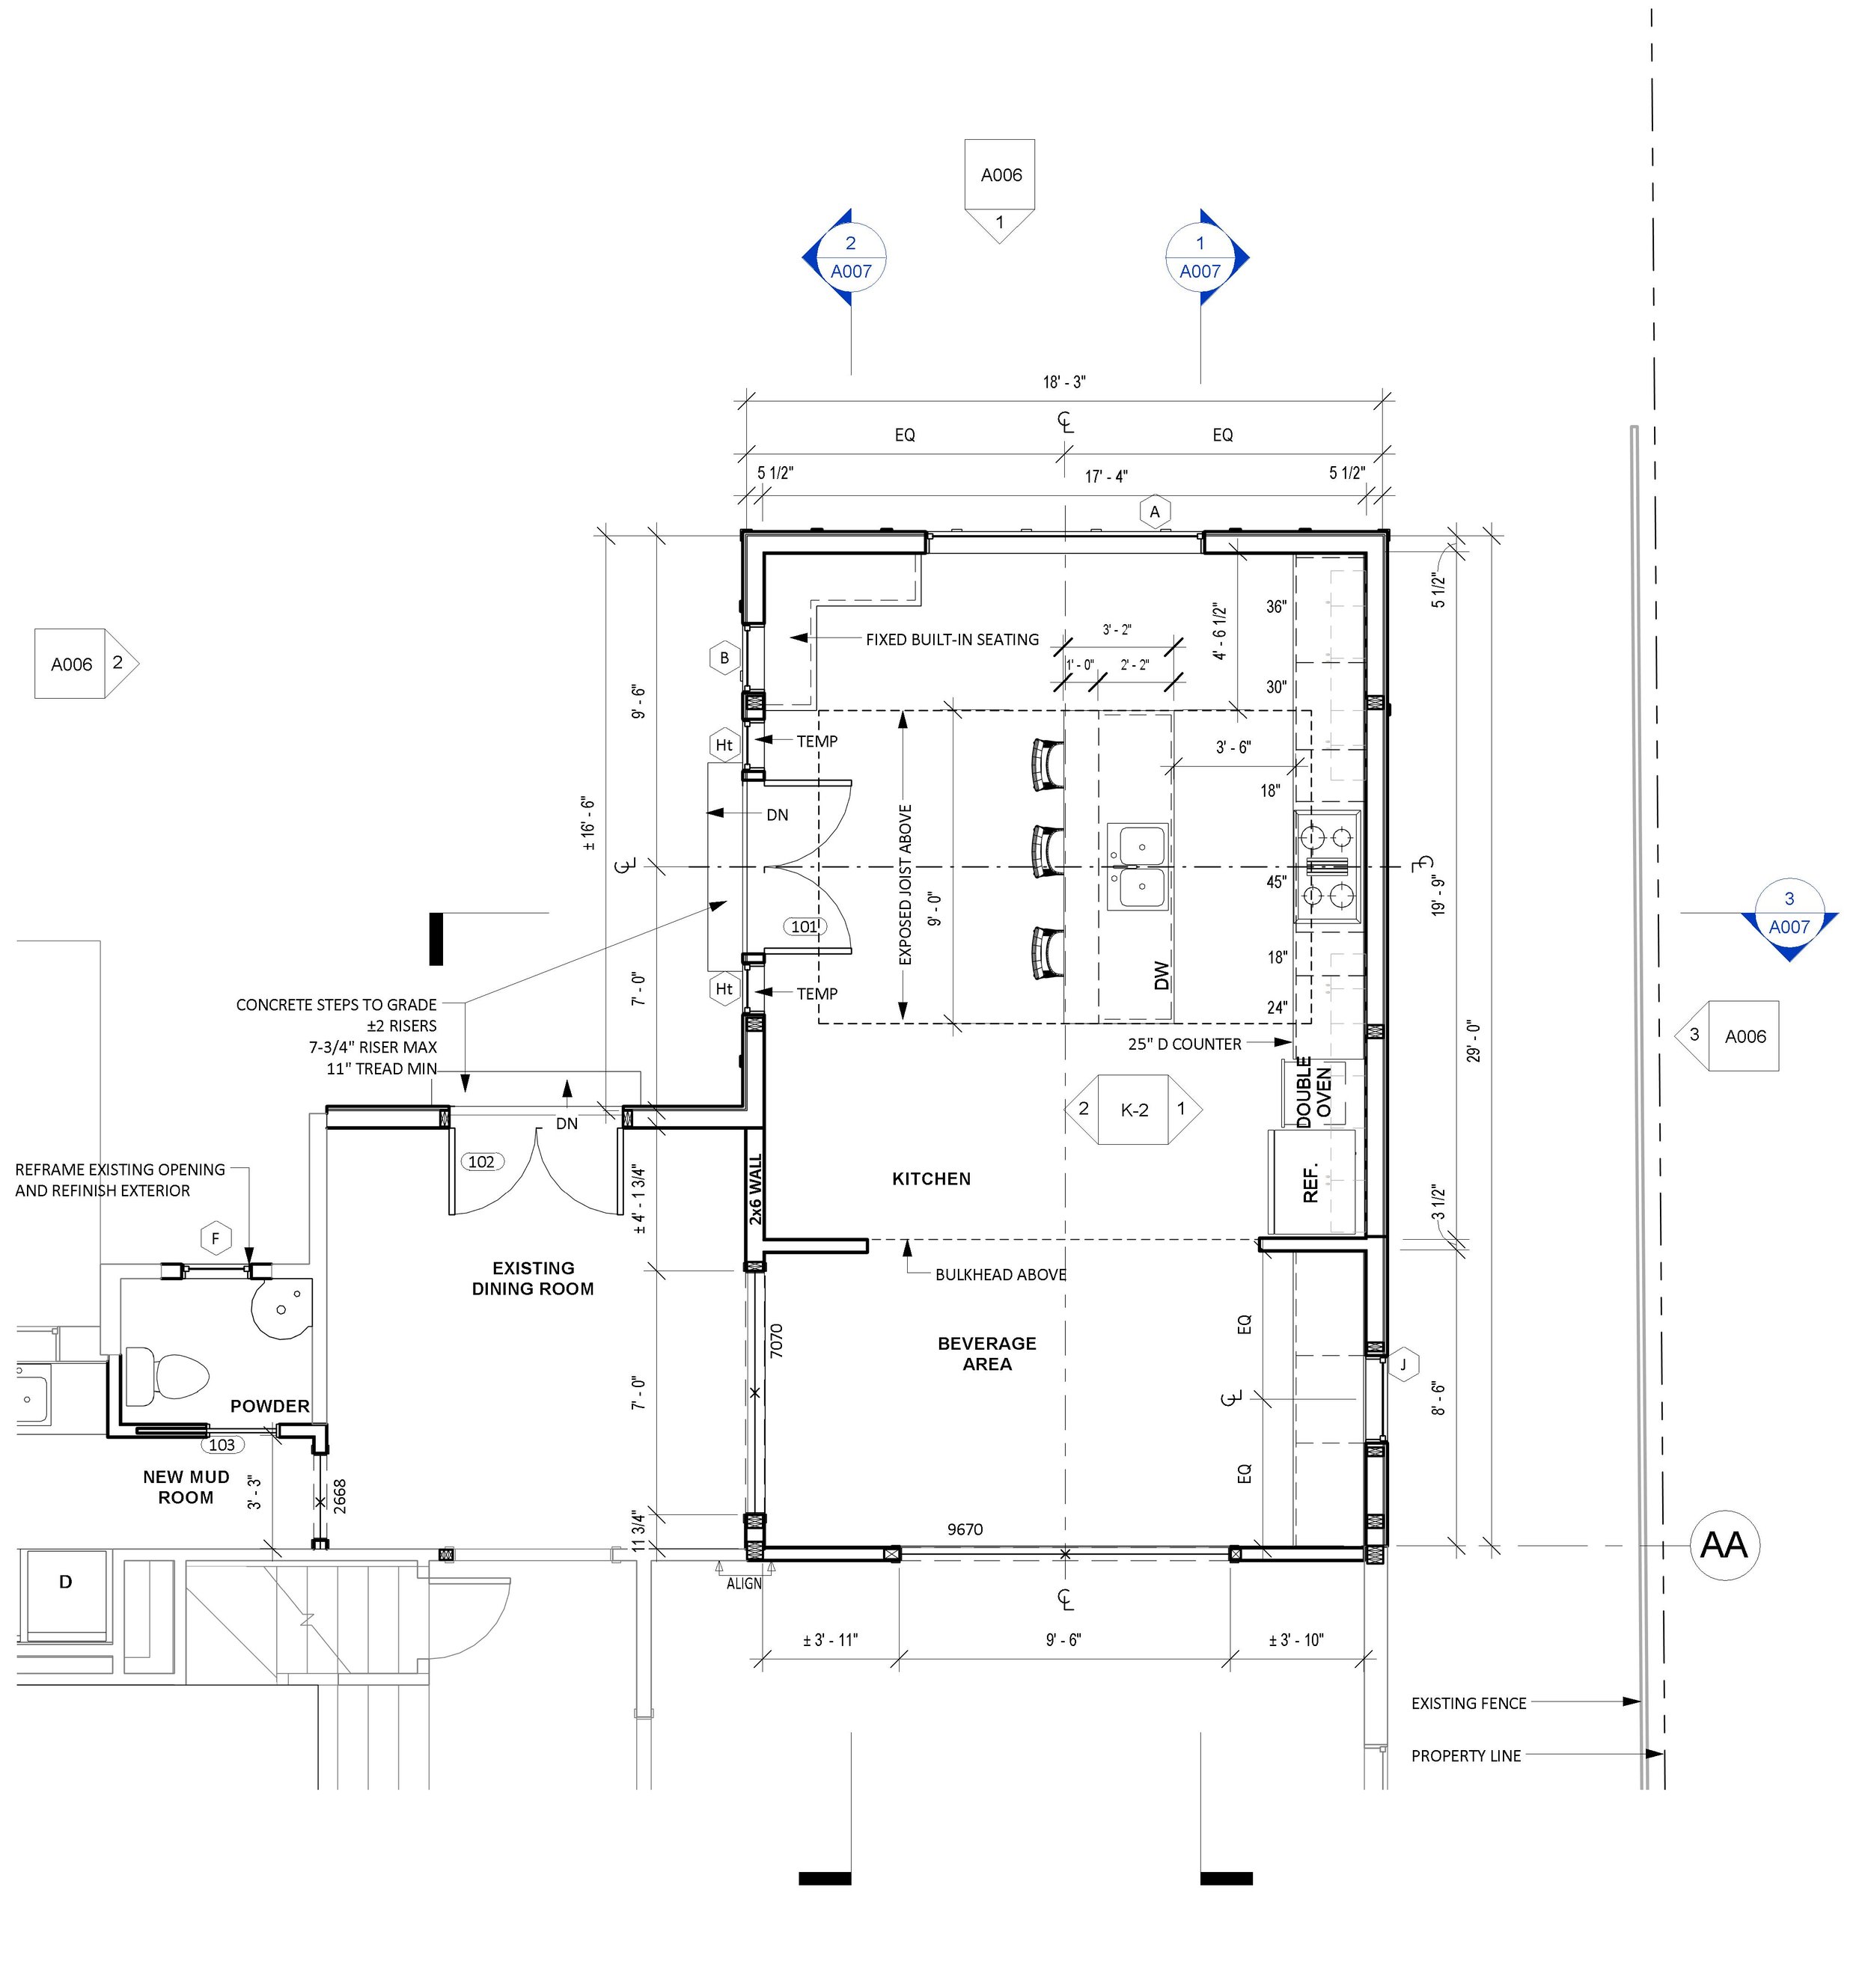 How to Draw a Floor Plan As a Beginner | EdrawMax Online